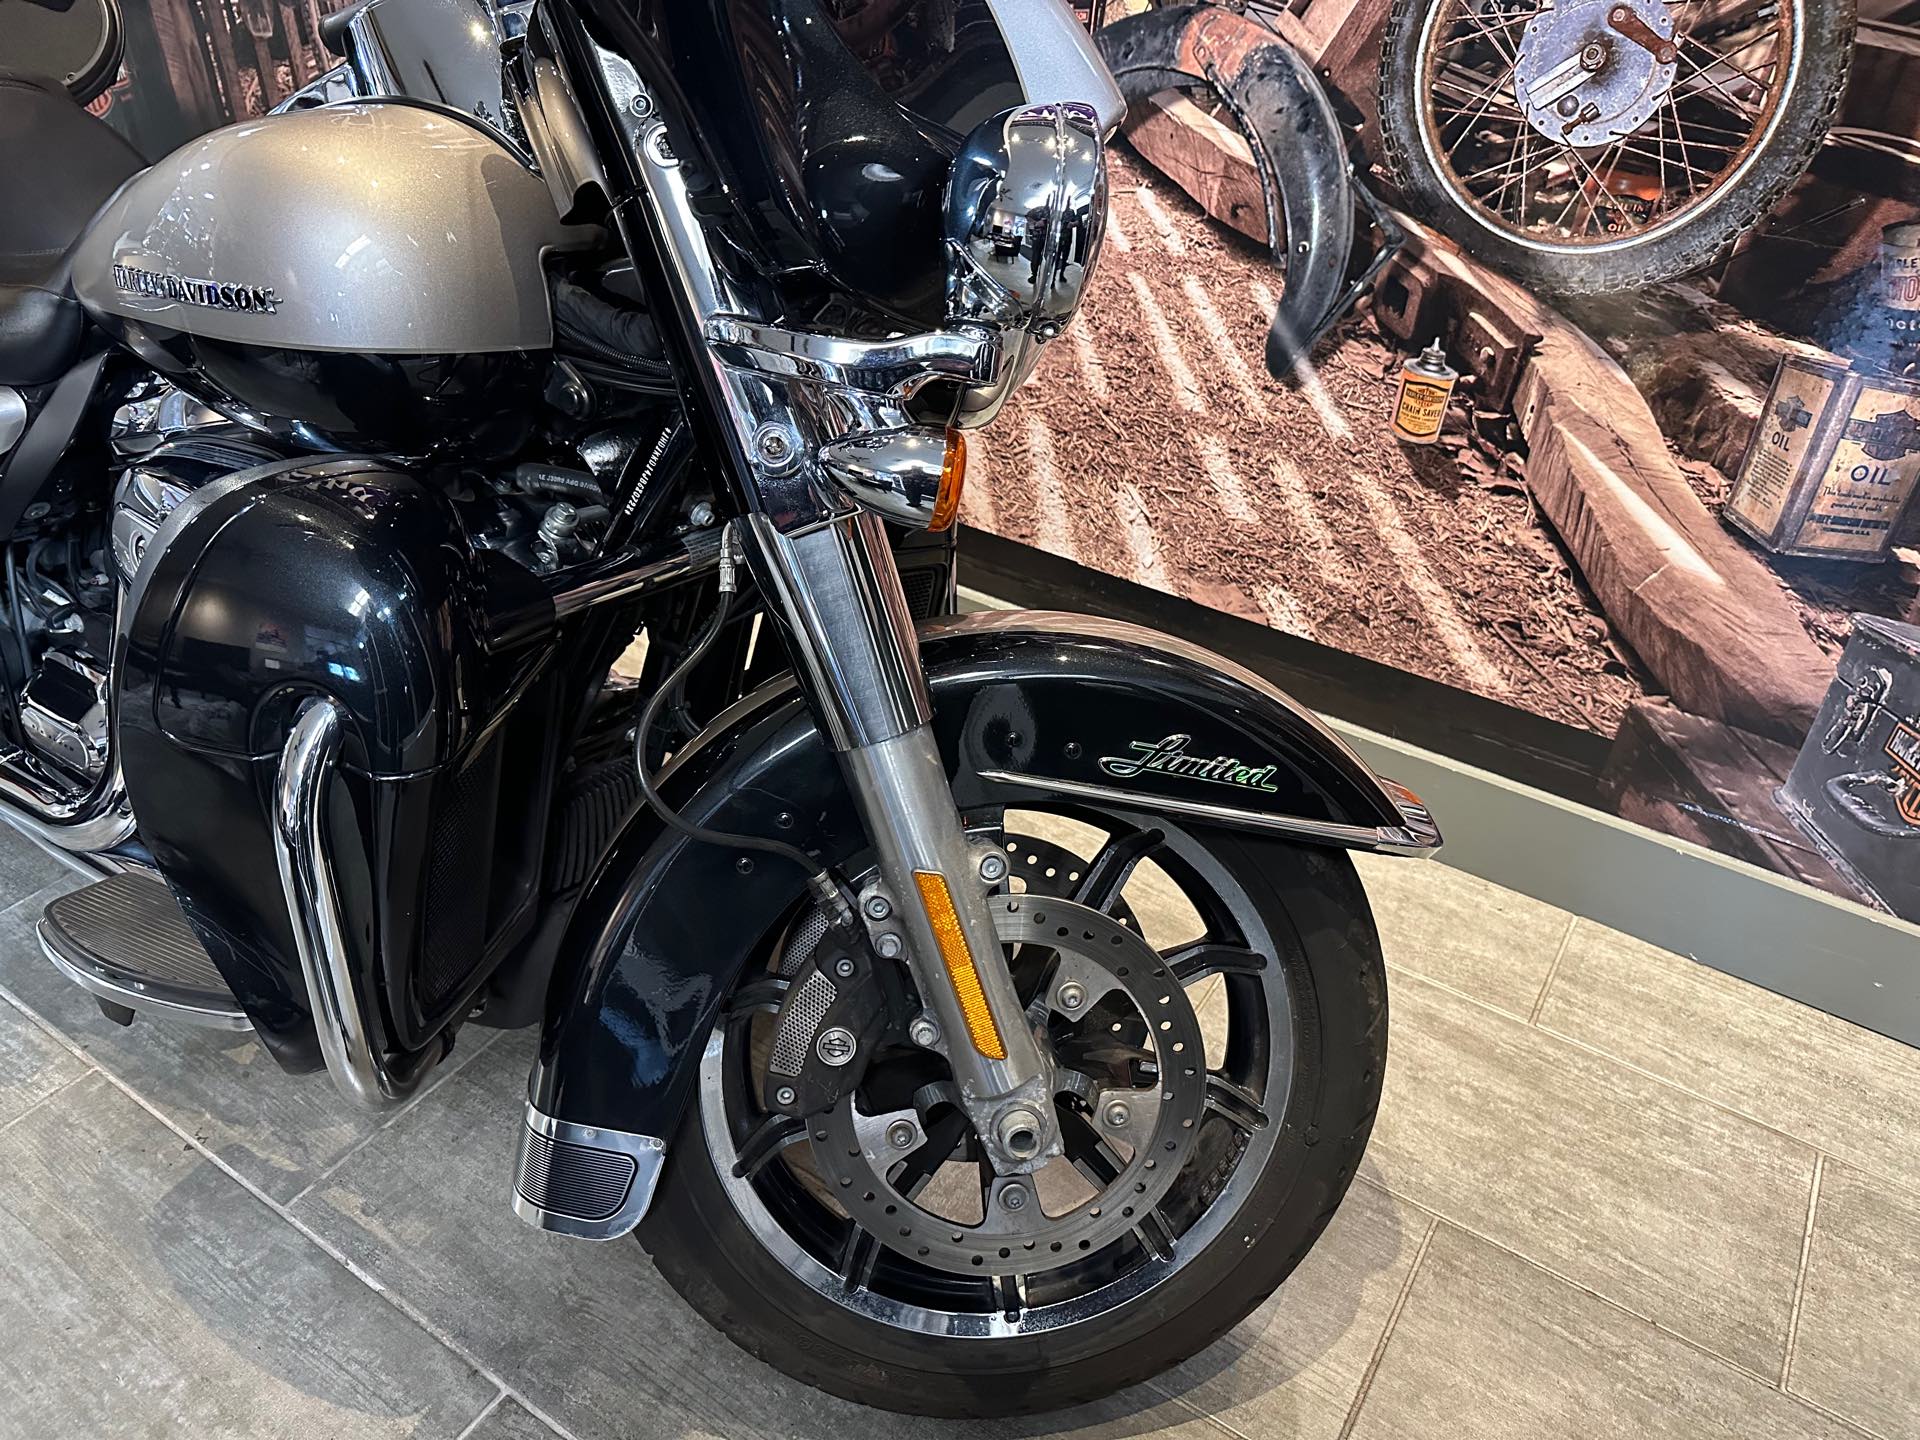 2018 Harley-Davidson Electra Glide Ultra Limited Low at Phantom Harley-Davidson